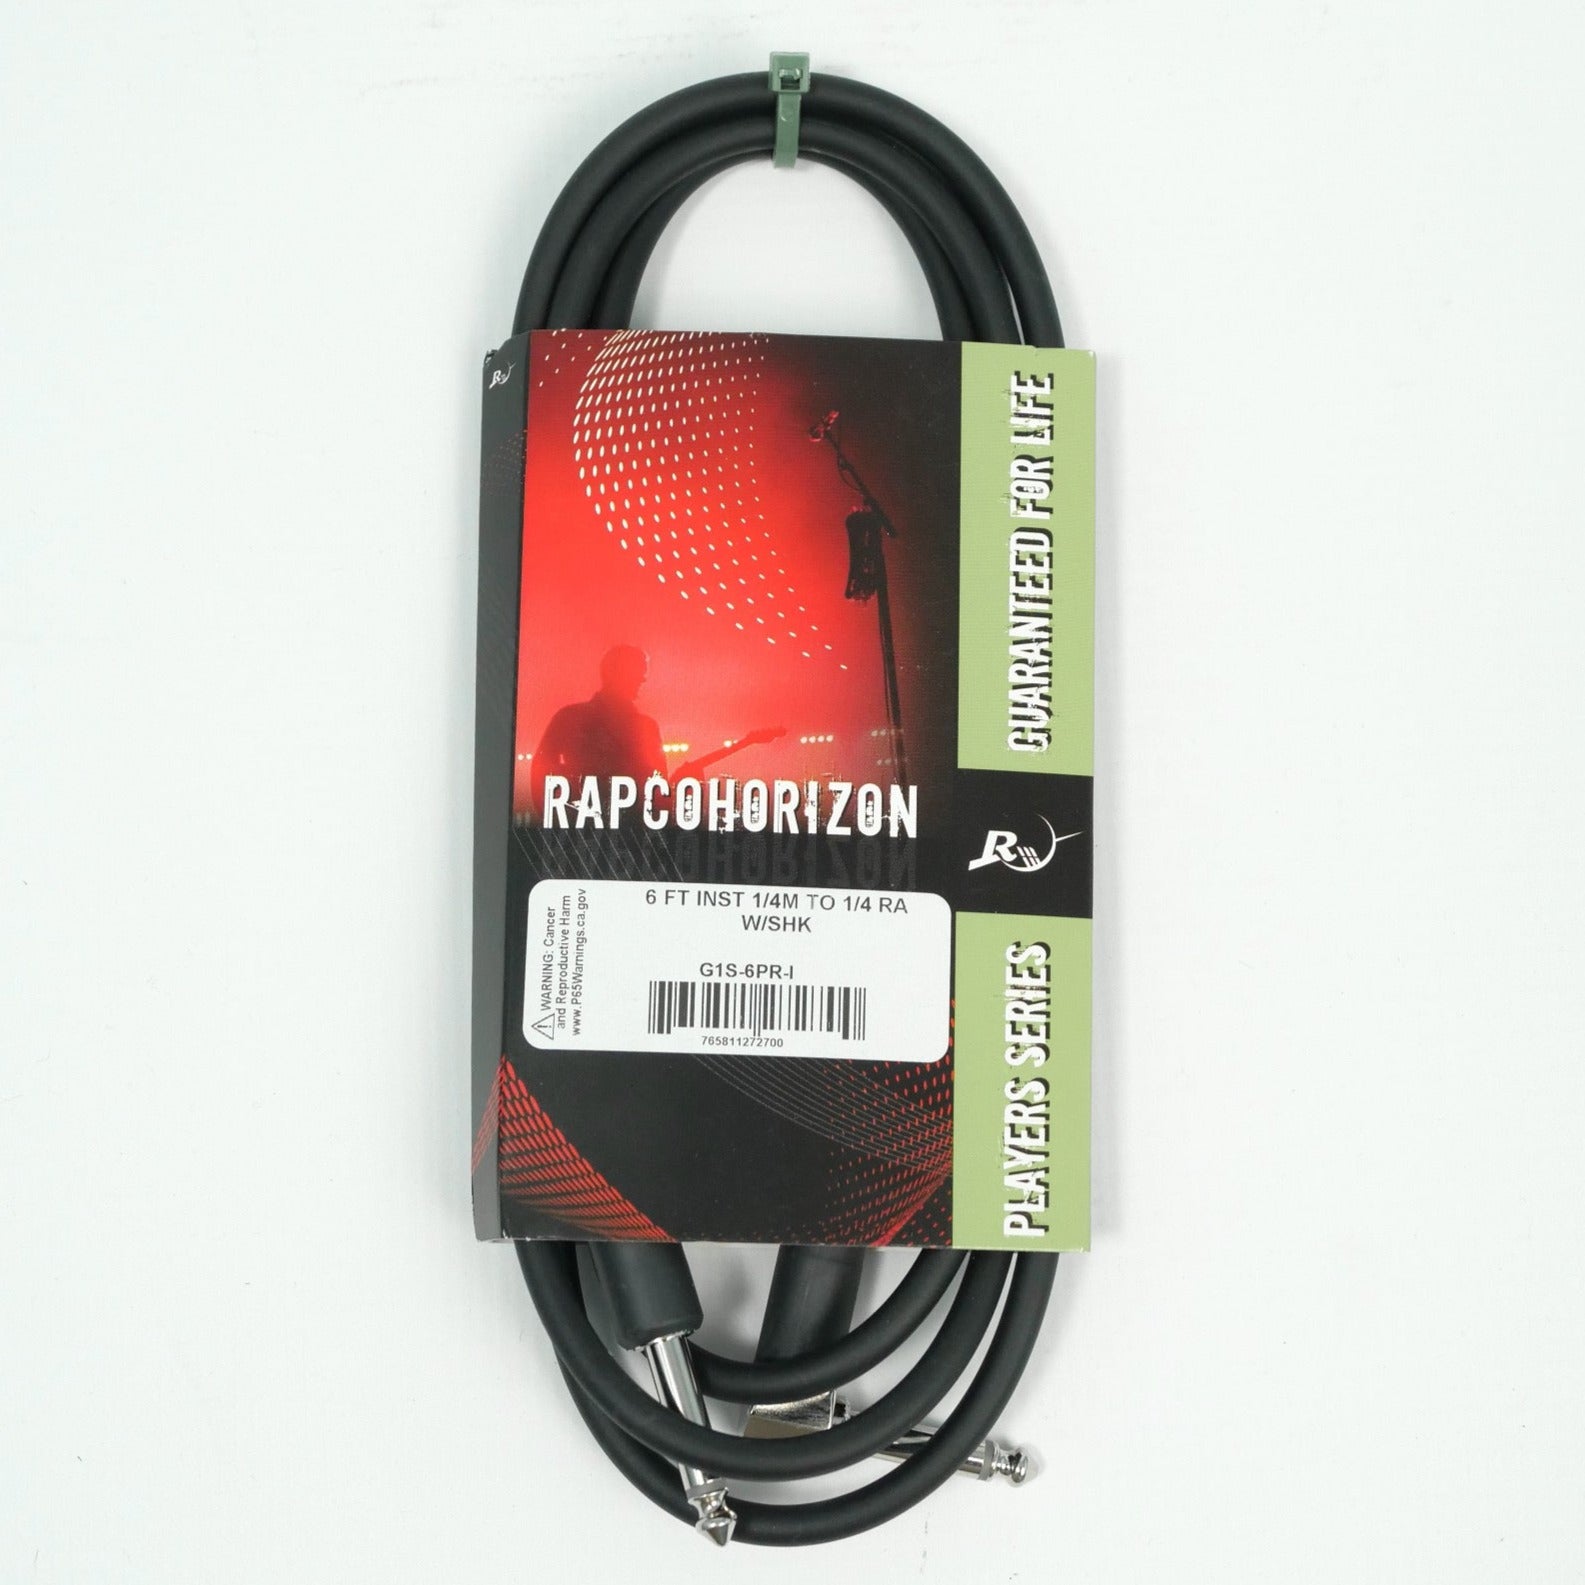 RapcoHorizon G1S-6PR 6ft 1/4" RA Instrument Cable G1S-6PR-I